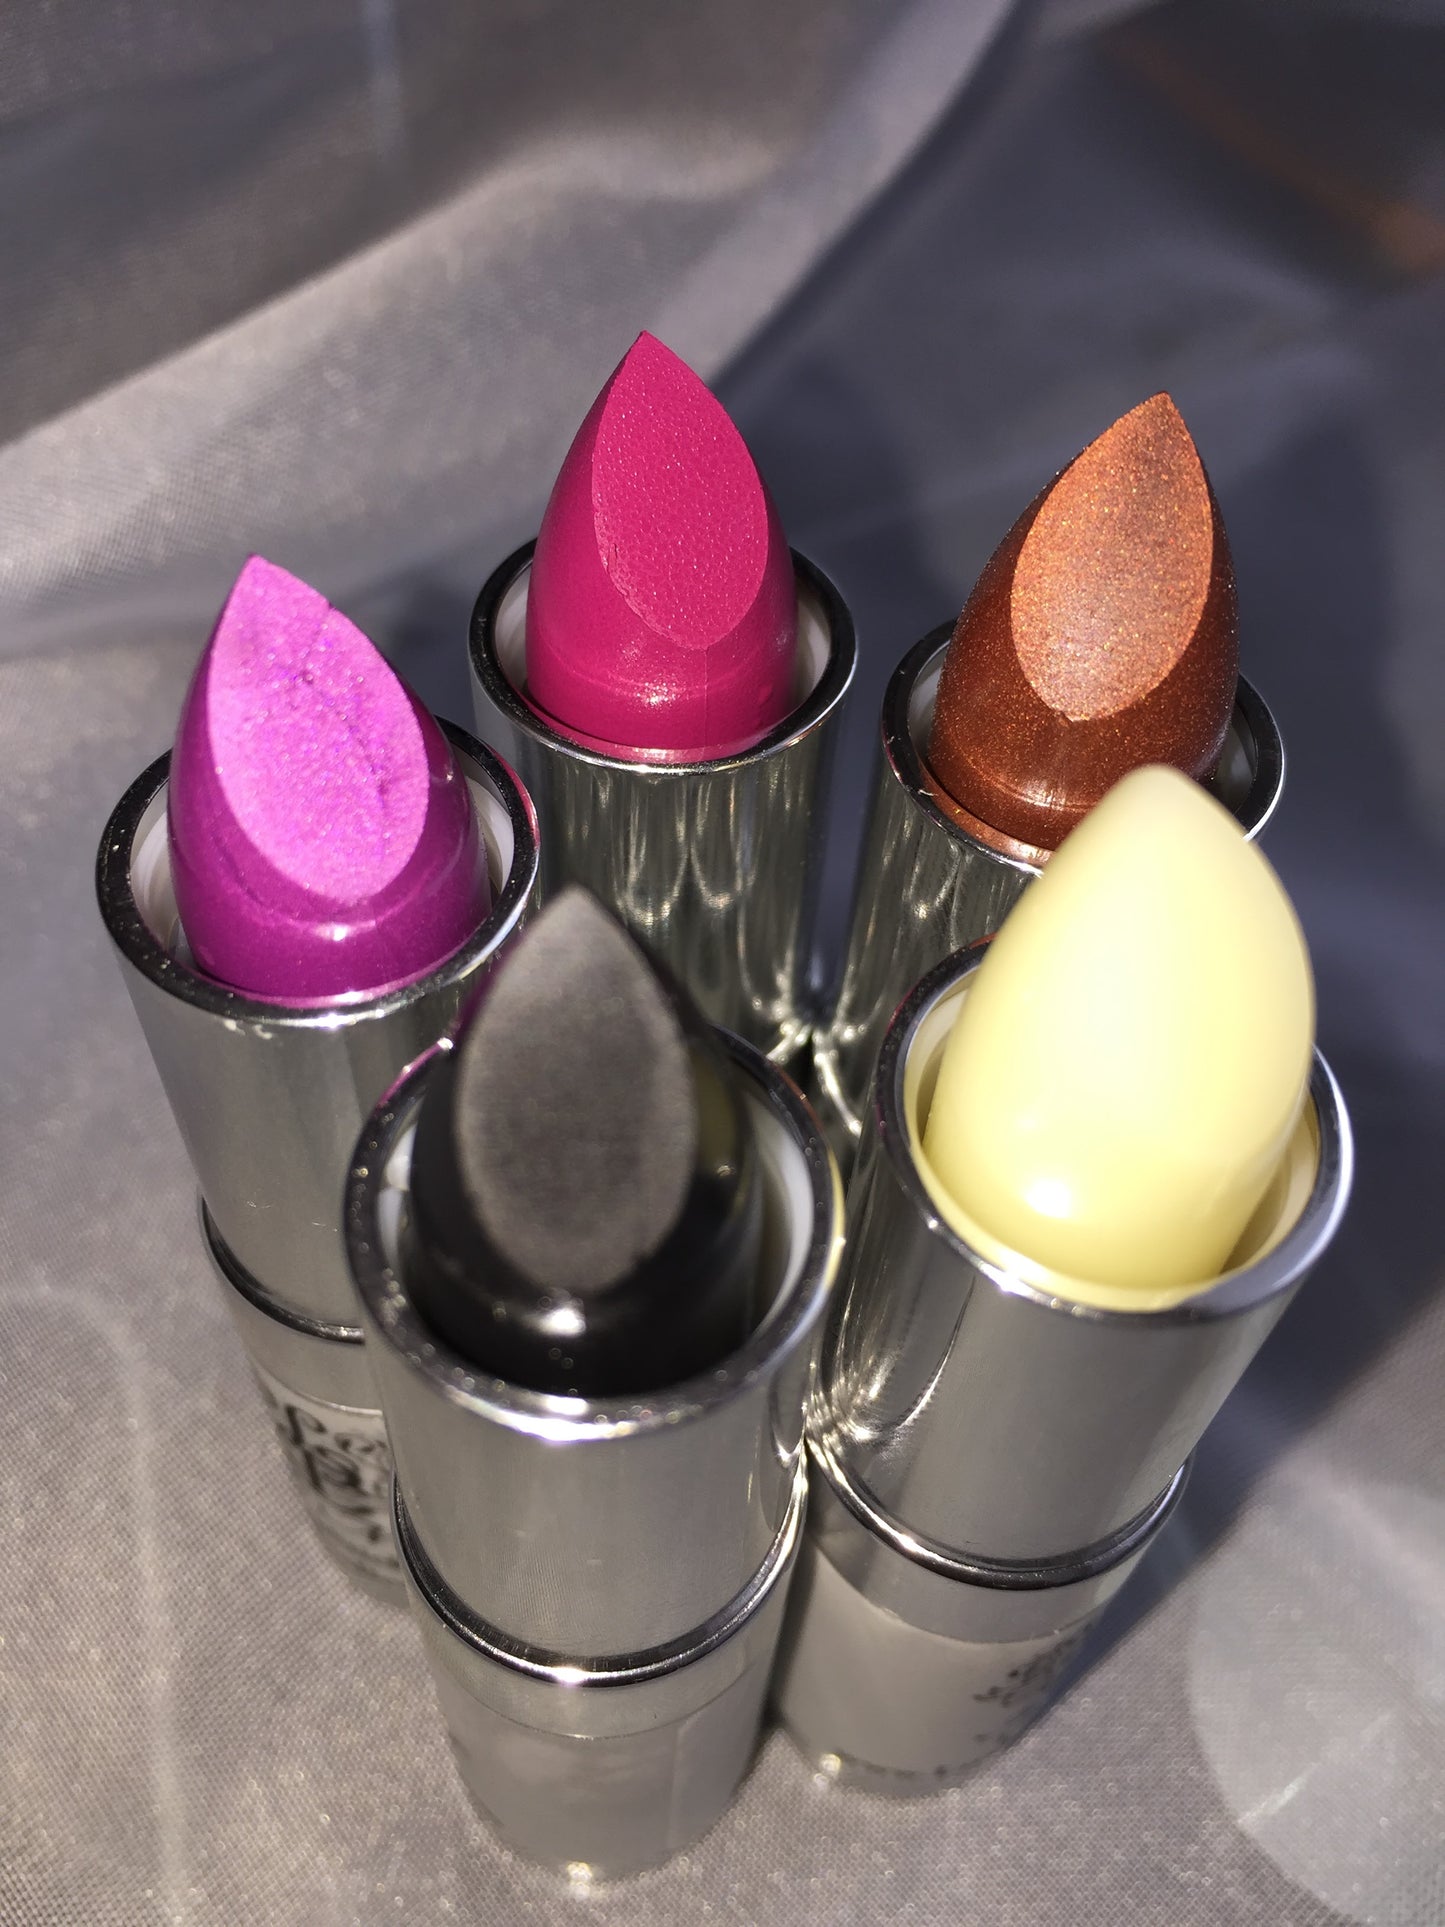 Black Matted, Luxhan Beauty Lipstick